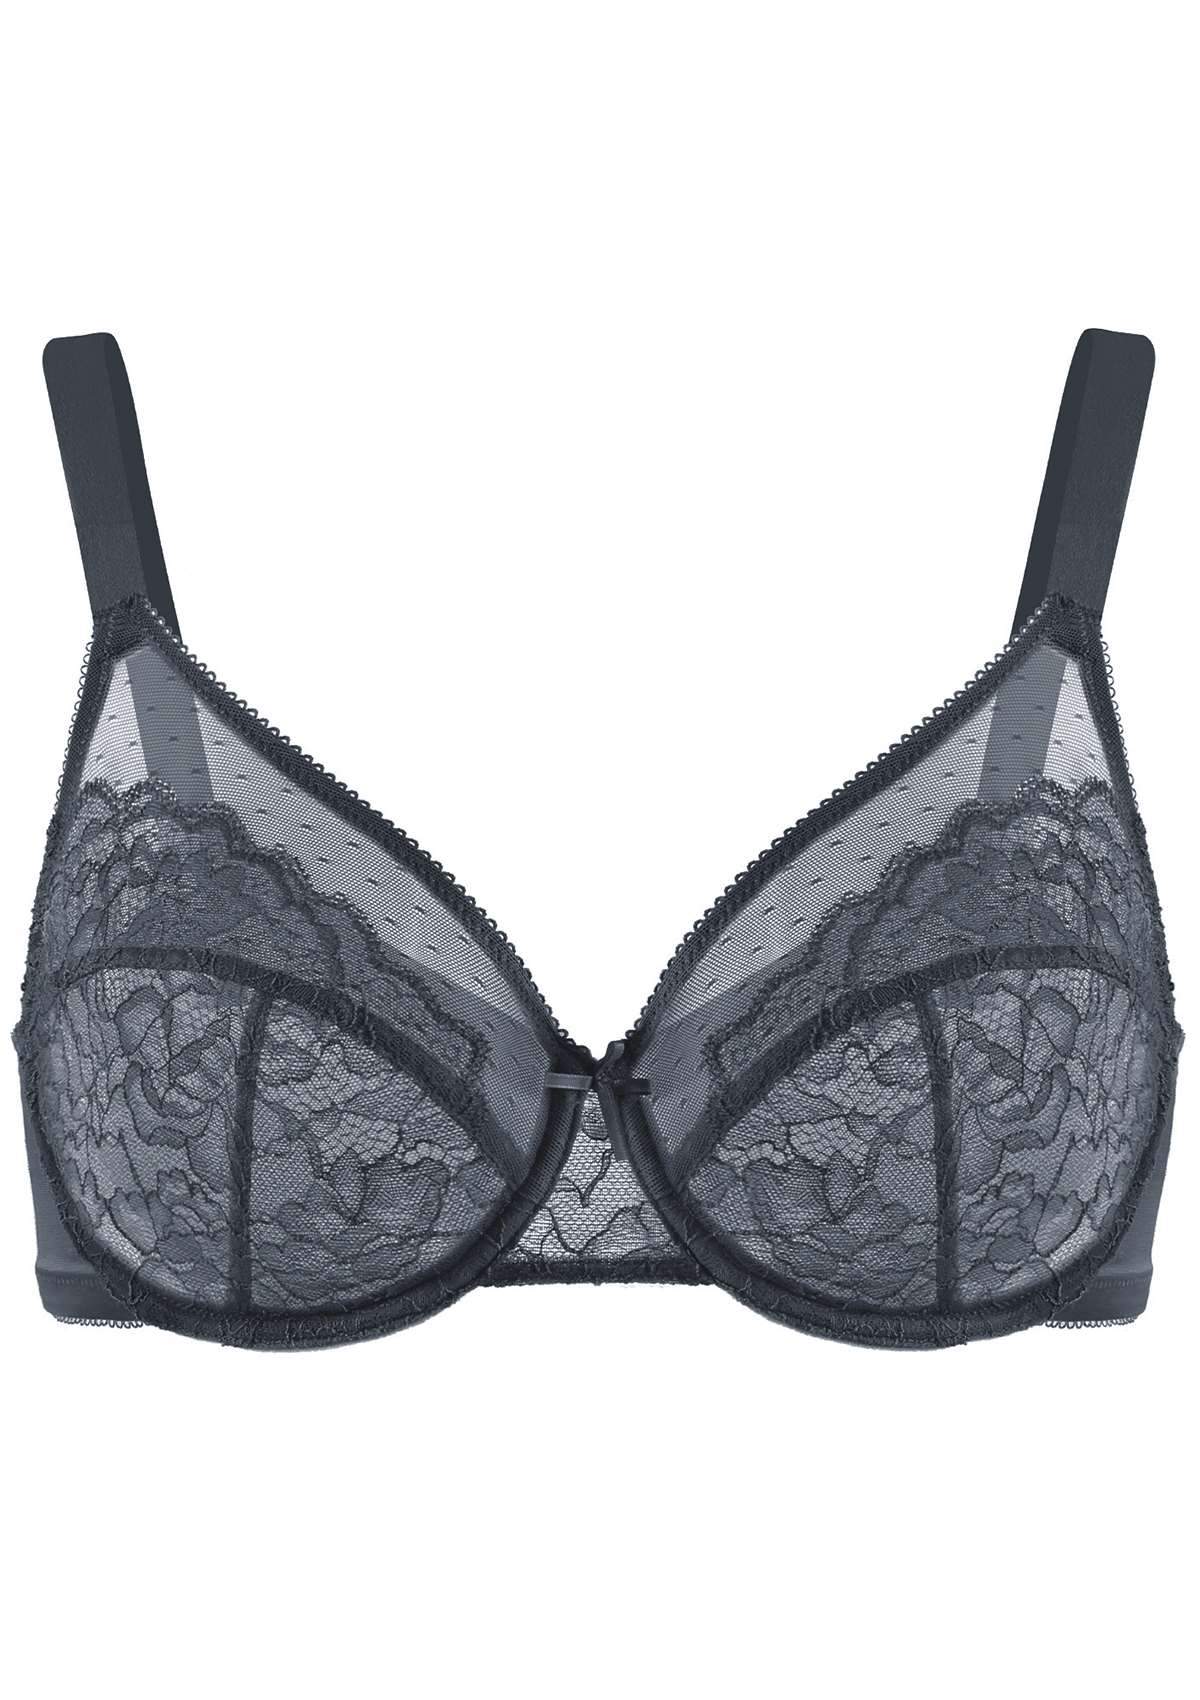 HSIA Enchante Matching Bra And Underwear Sets: Uplift Big Boobs Bra - Dark Gray / 40 / DD/E